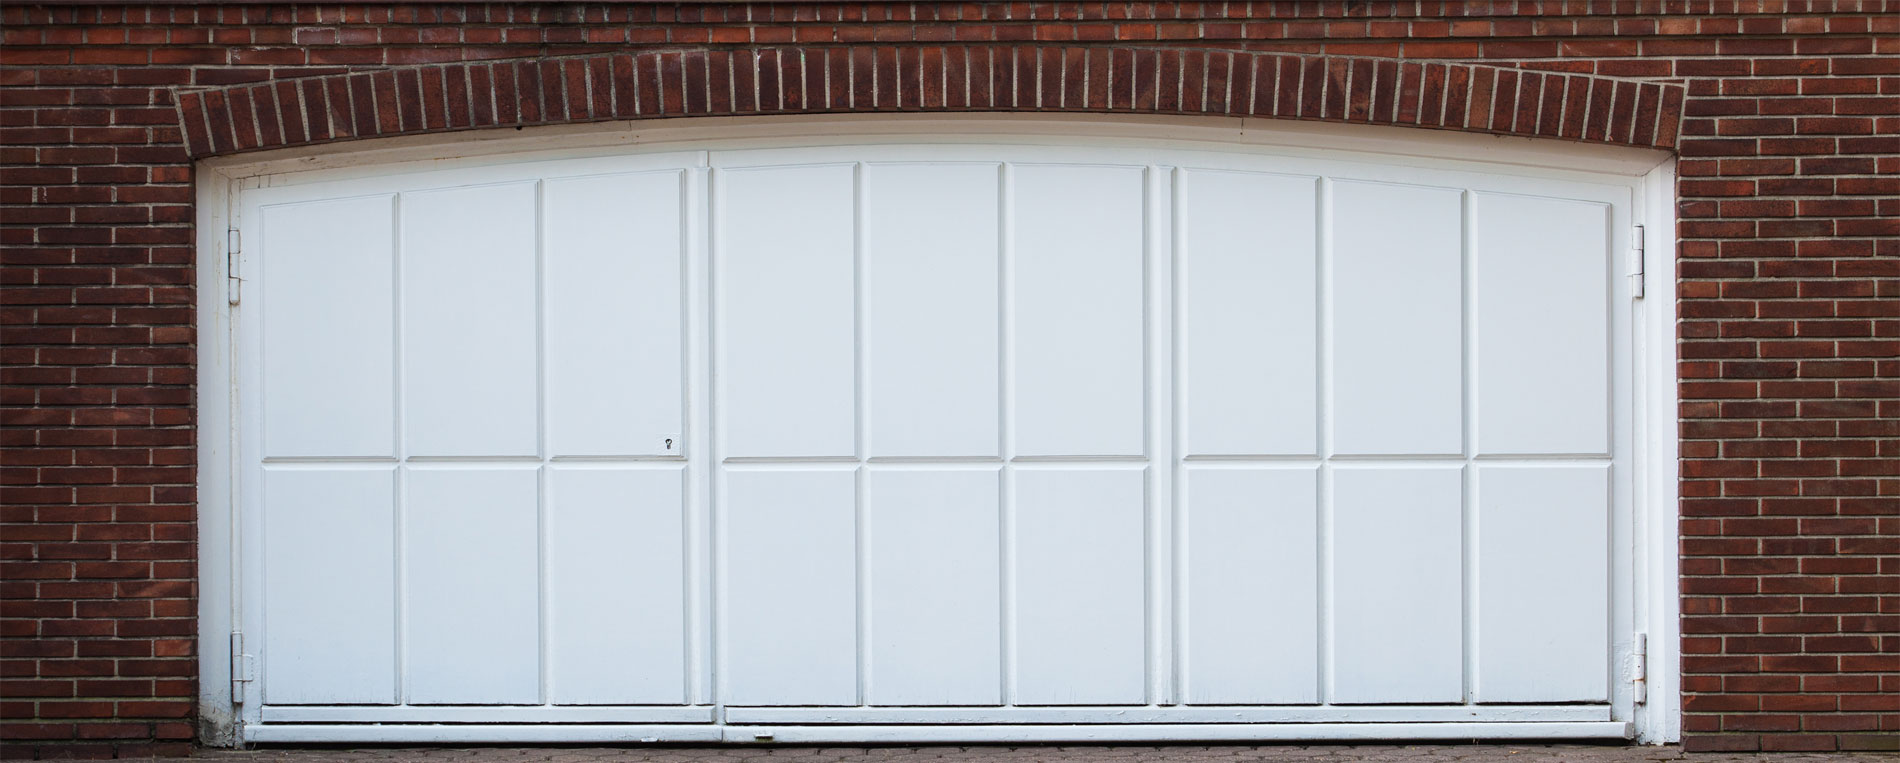 What Are The Features of a Garage Door Opener?